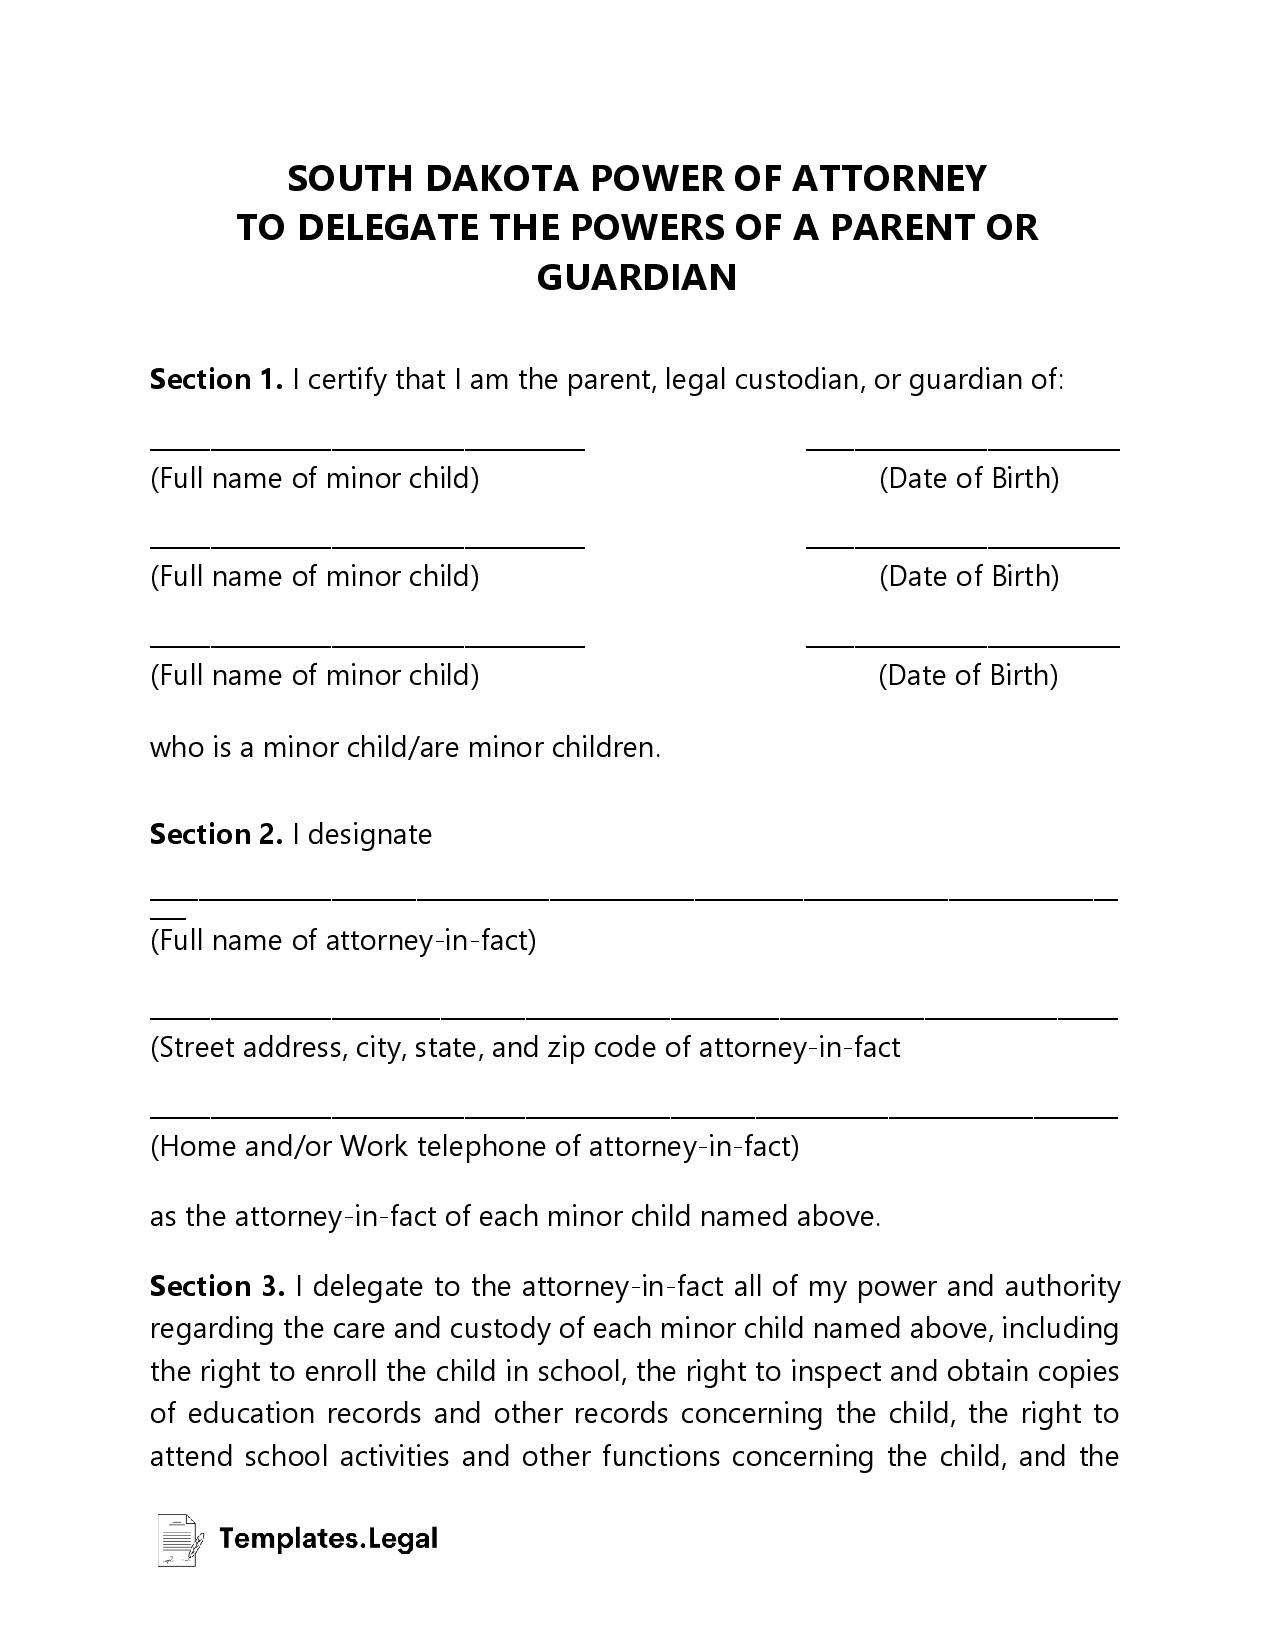 South Dakota Minor (Child) Power of Attorney - Templates.Legal